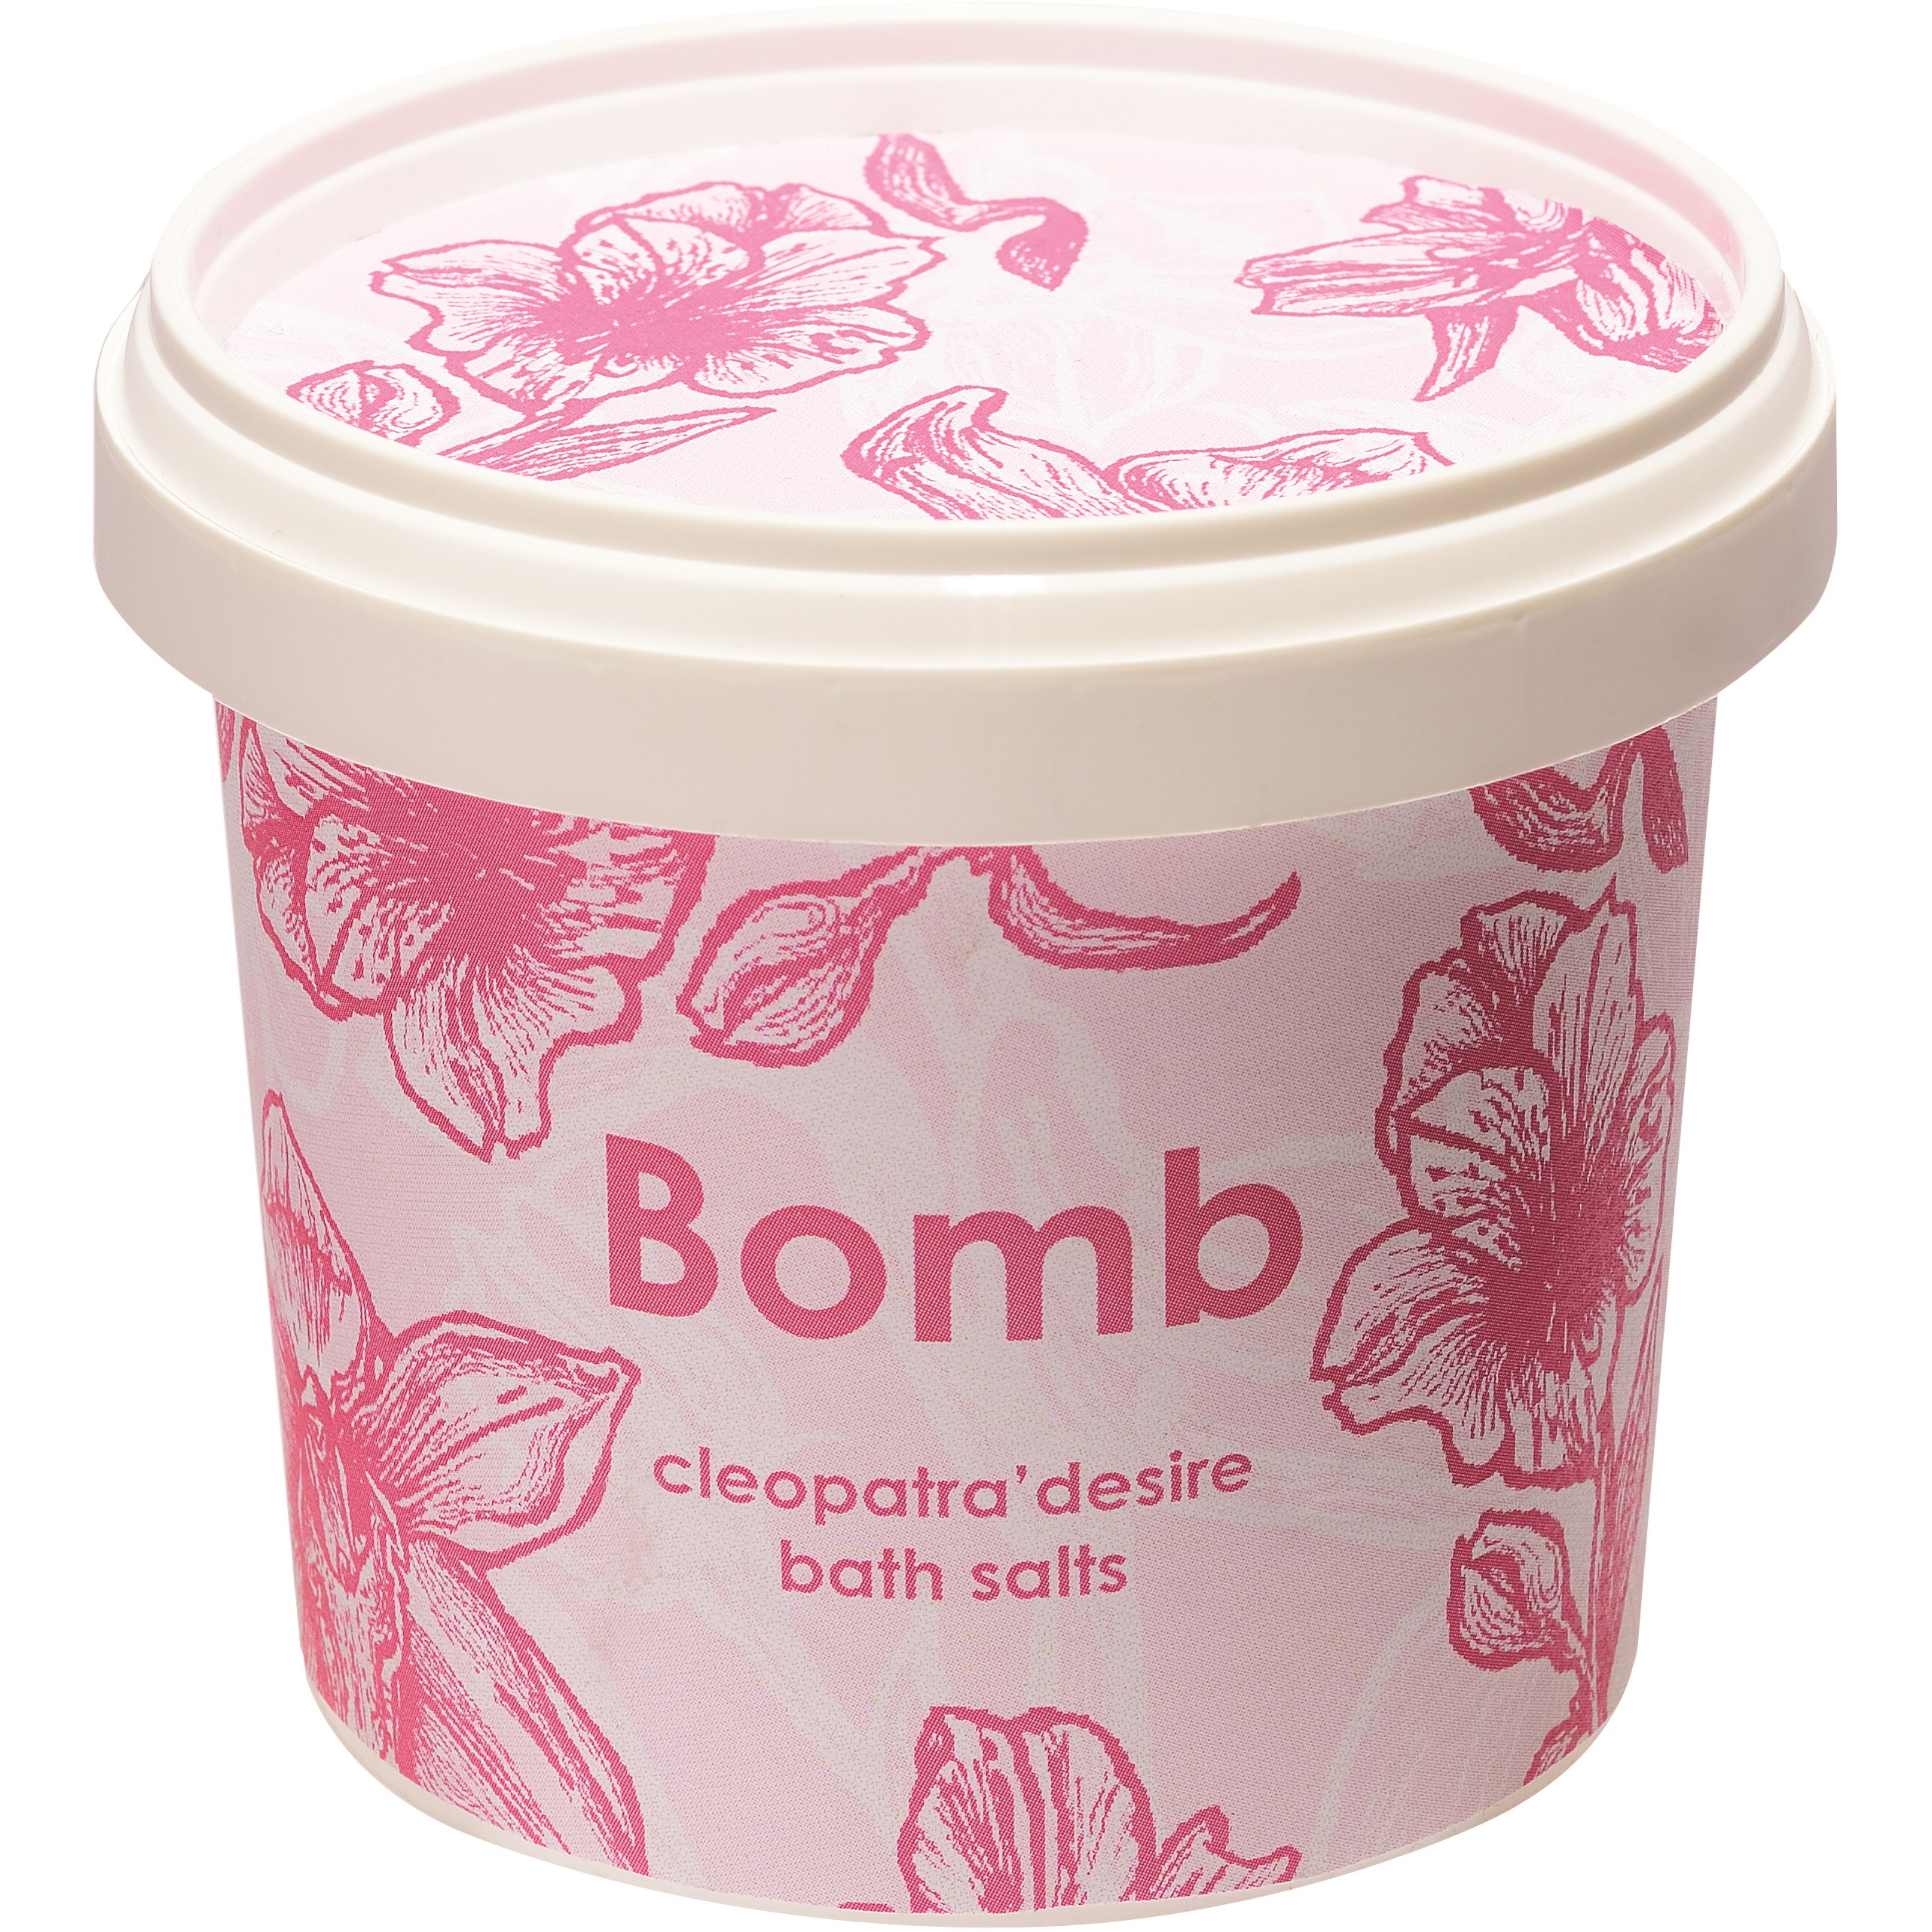 Bilde av Bomb Cosmetics Bomb Bath Salt Cleopatras Desire